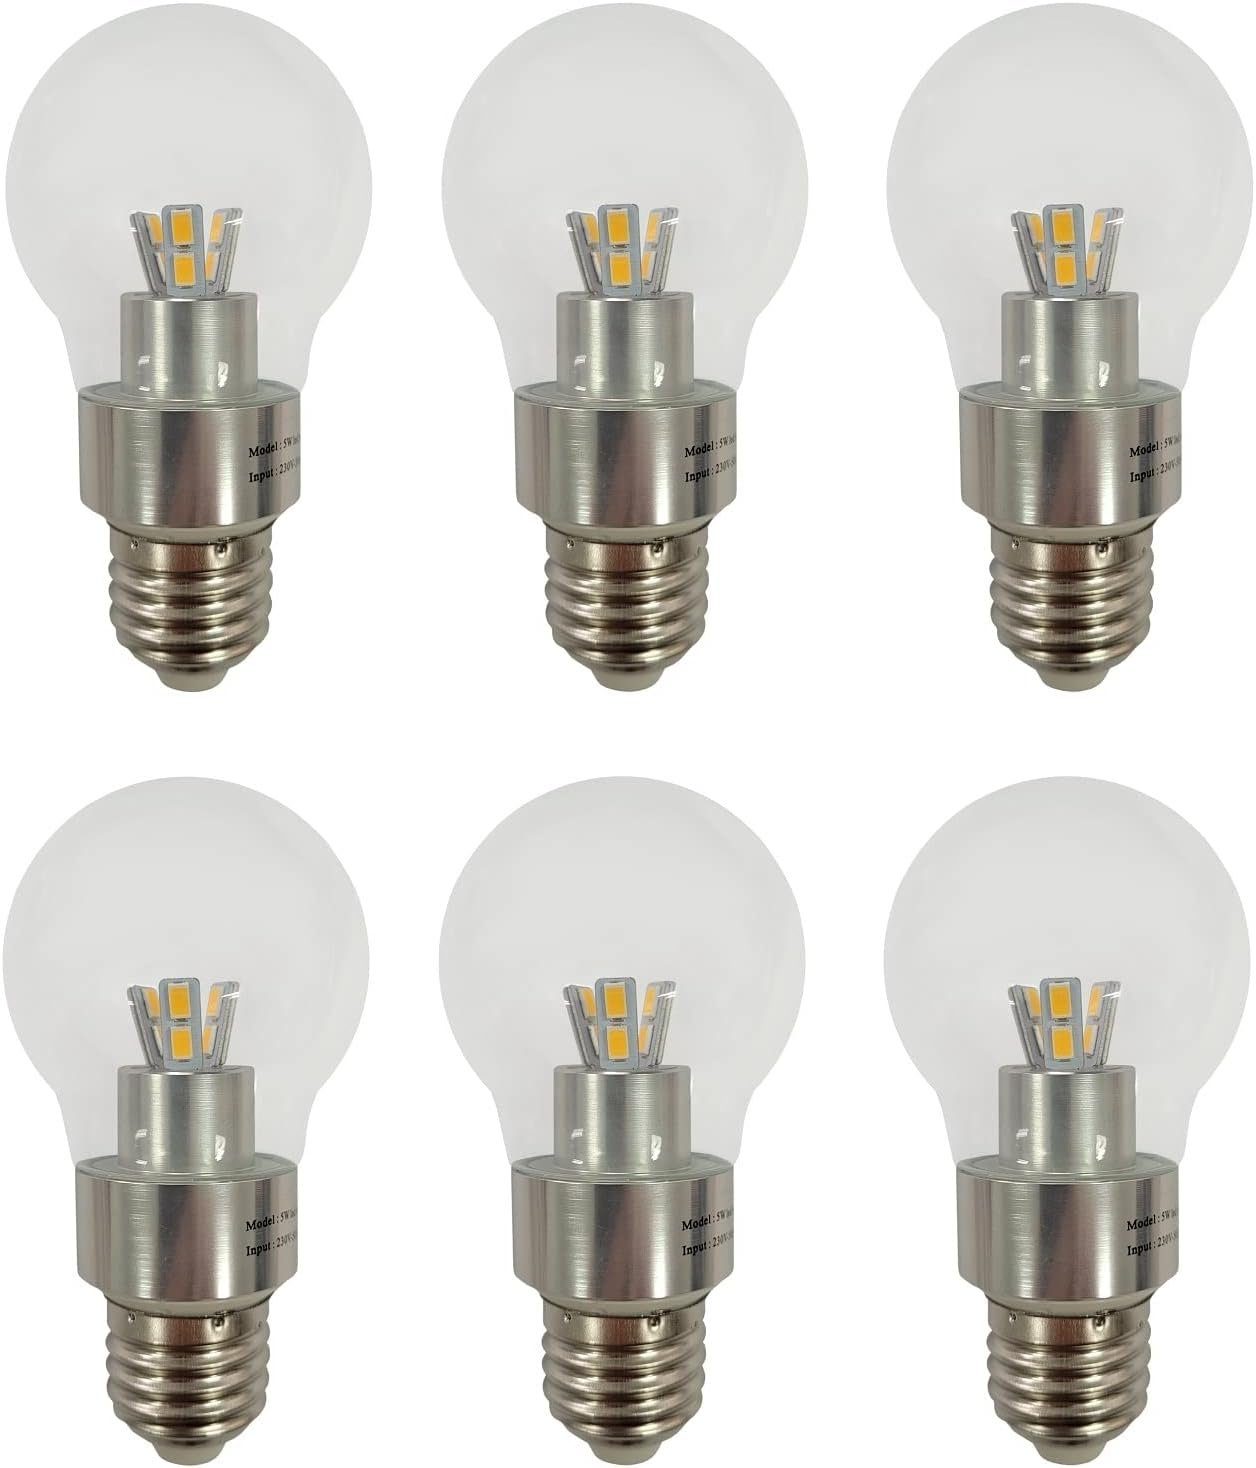 Provance LED-Leuchtmittel 6 x LED Leuchtmittel Standard E27 Glühlampe 5W 480 Lumen 2700 K, E27, warmweiß